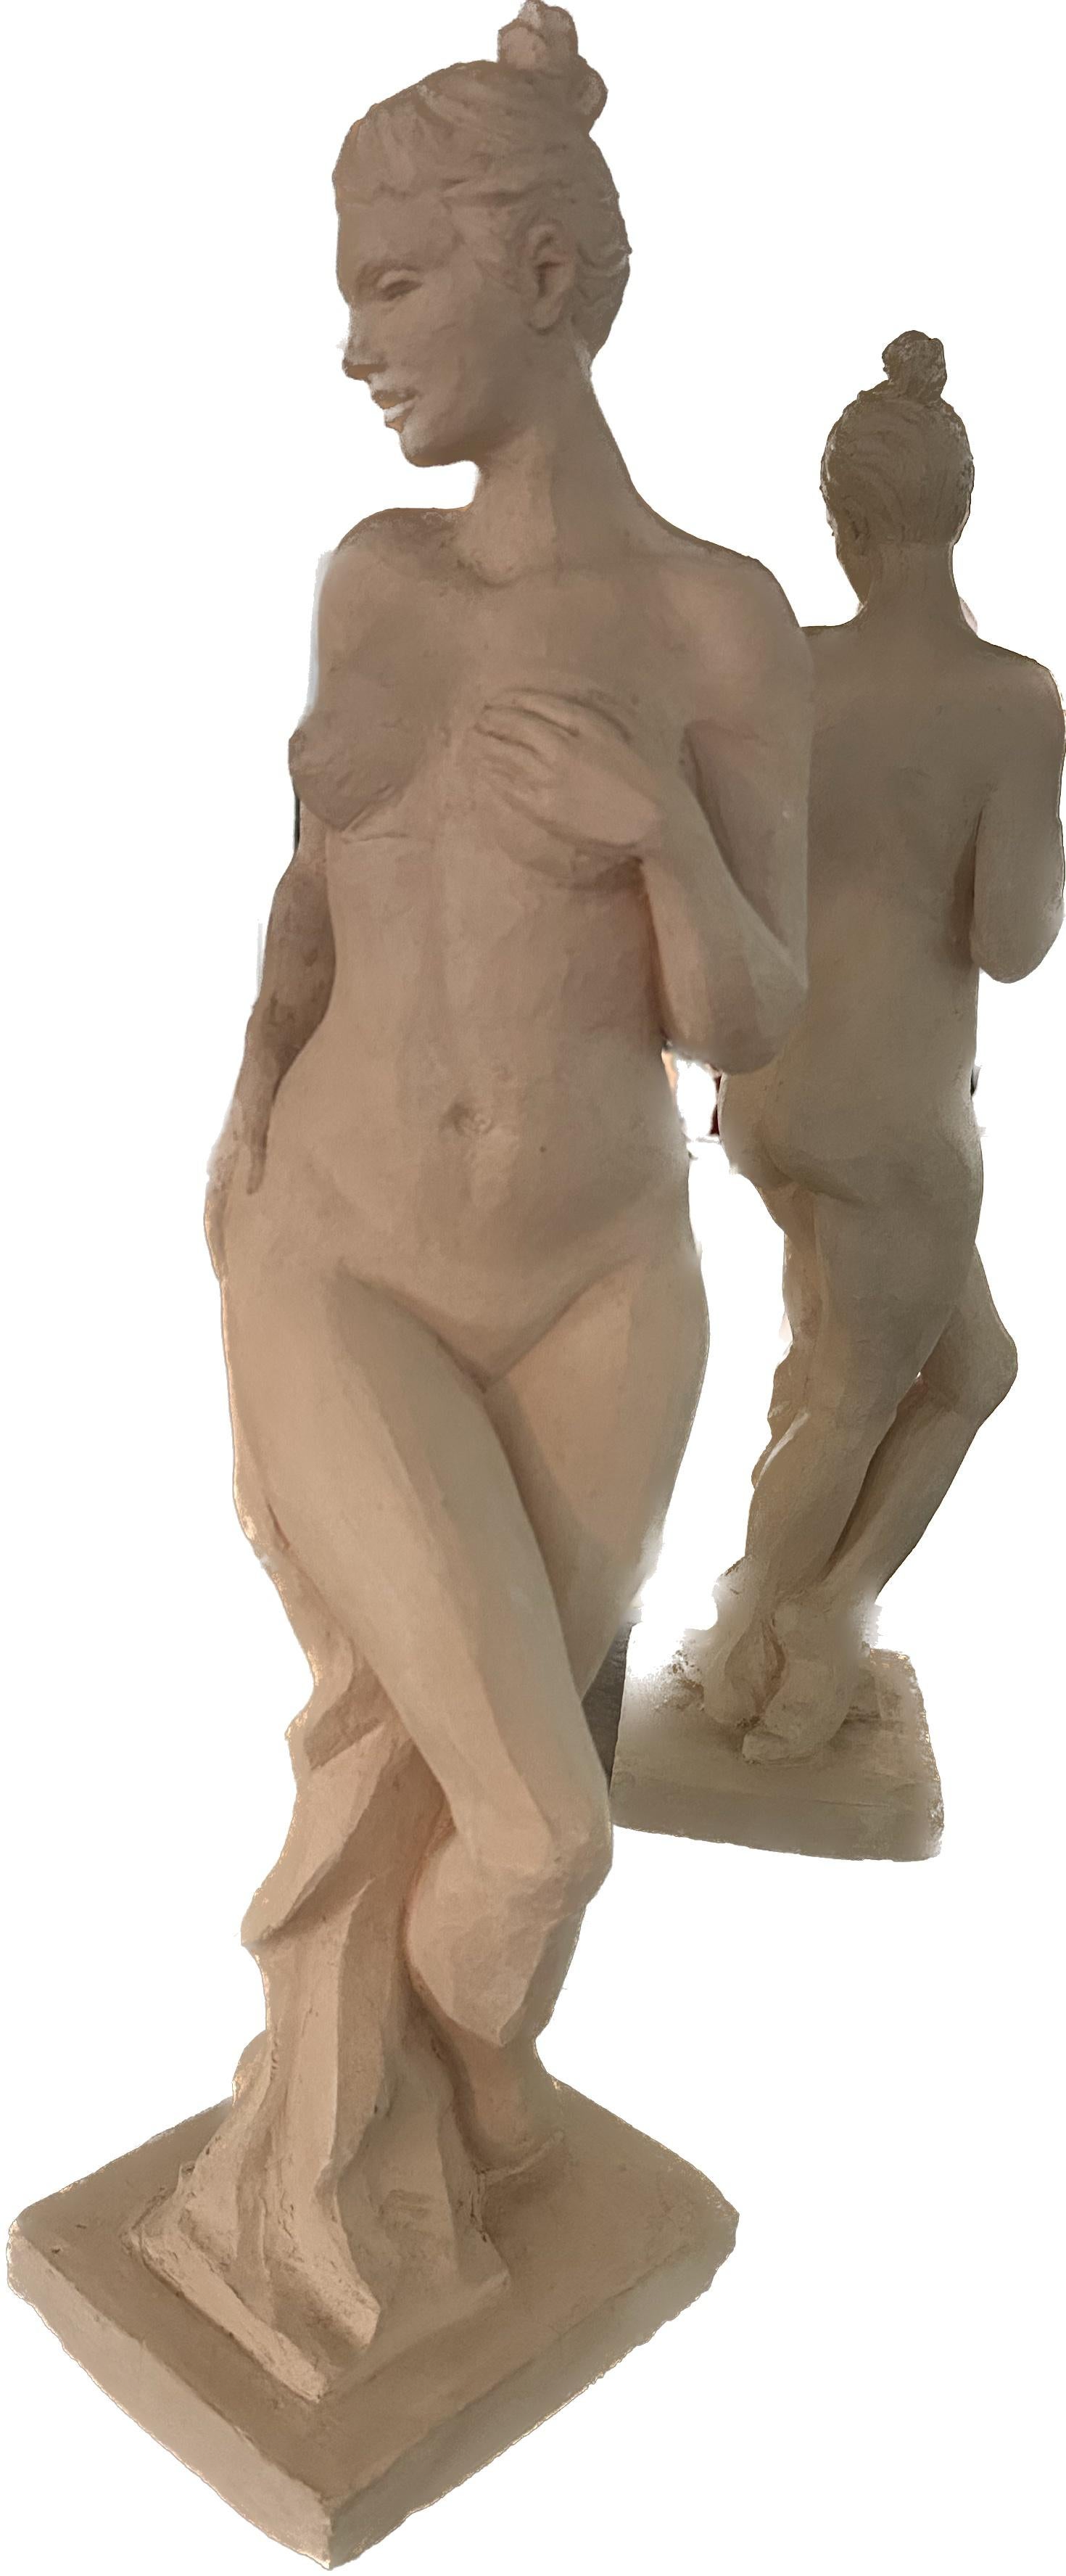 Aktfigur, Skulptur, Keramik, handgefertigt von Garo, Unikat, Keramik